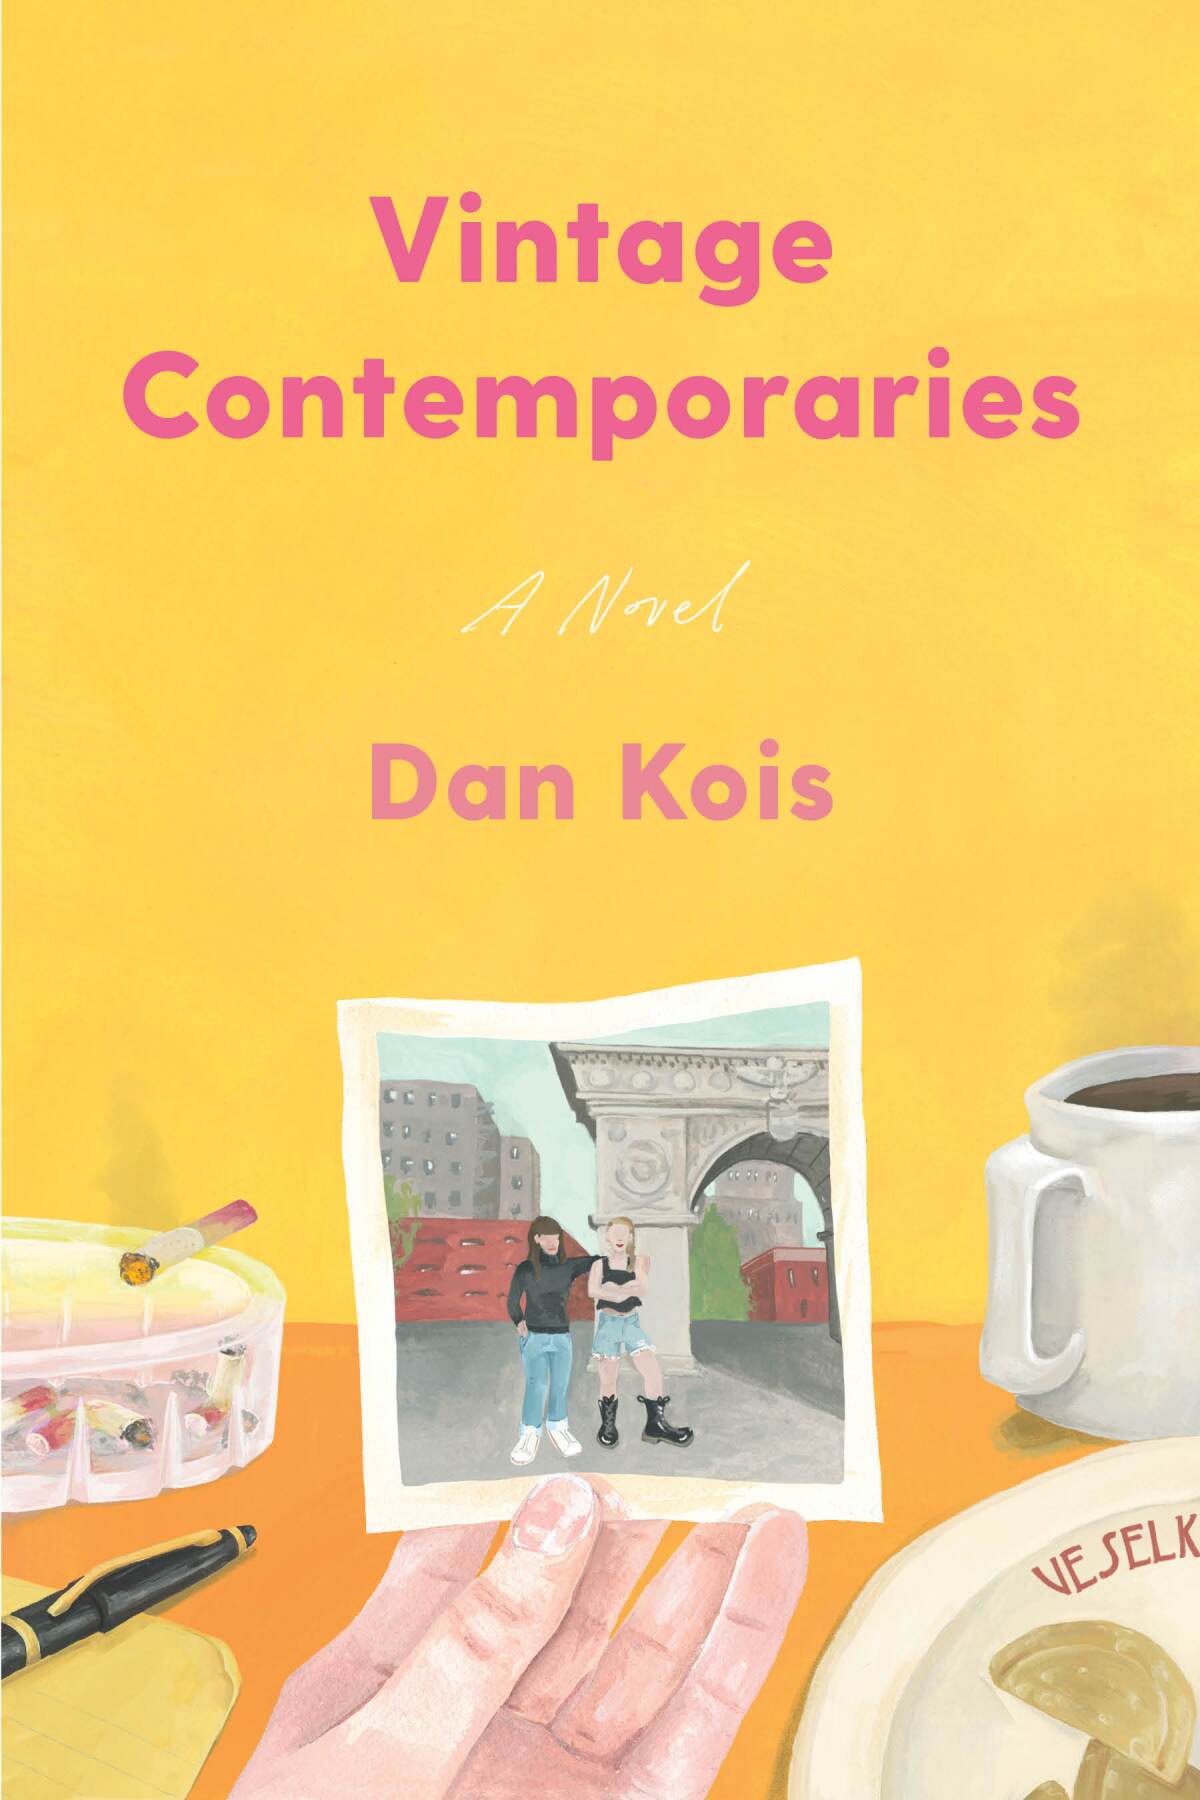 'Vintage Contemporaries,' by Dan Kois